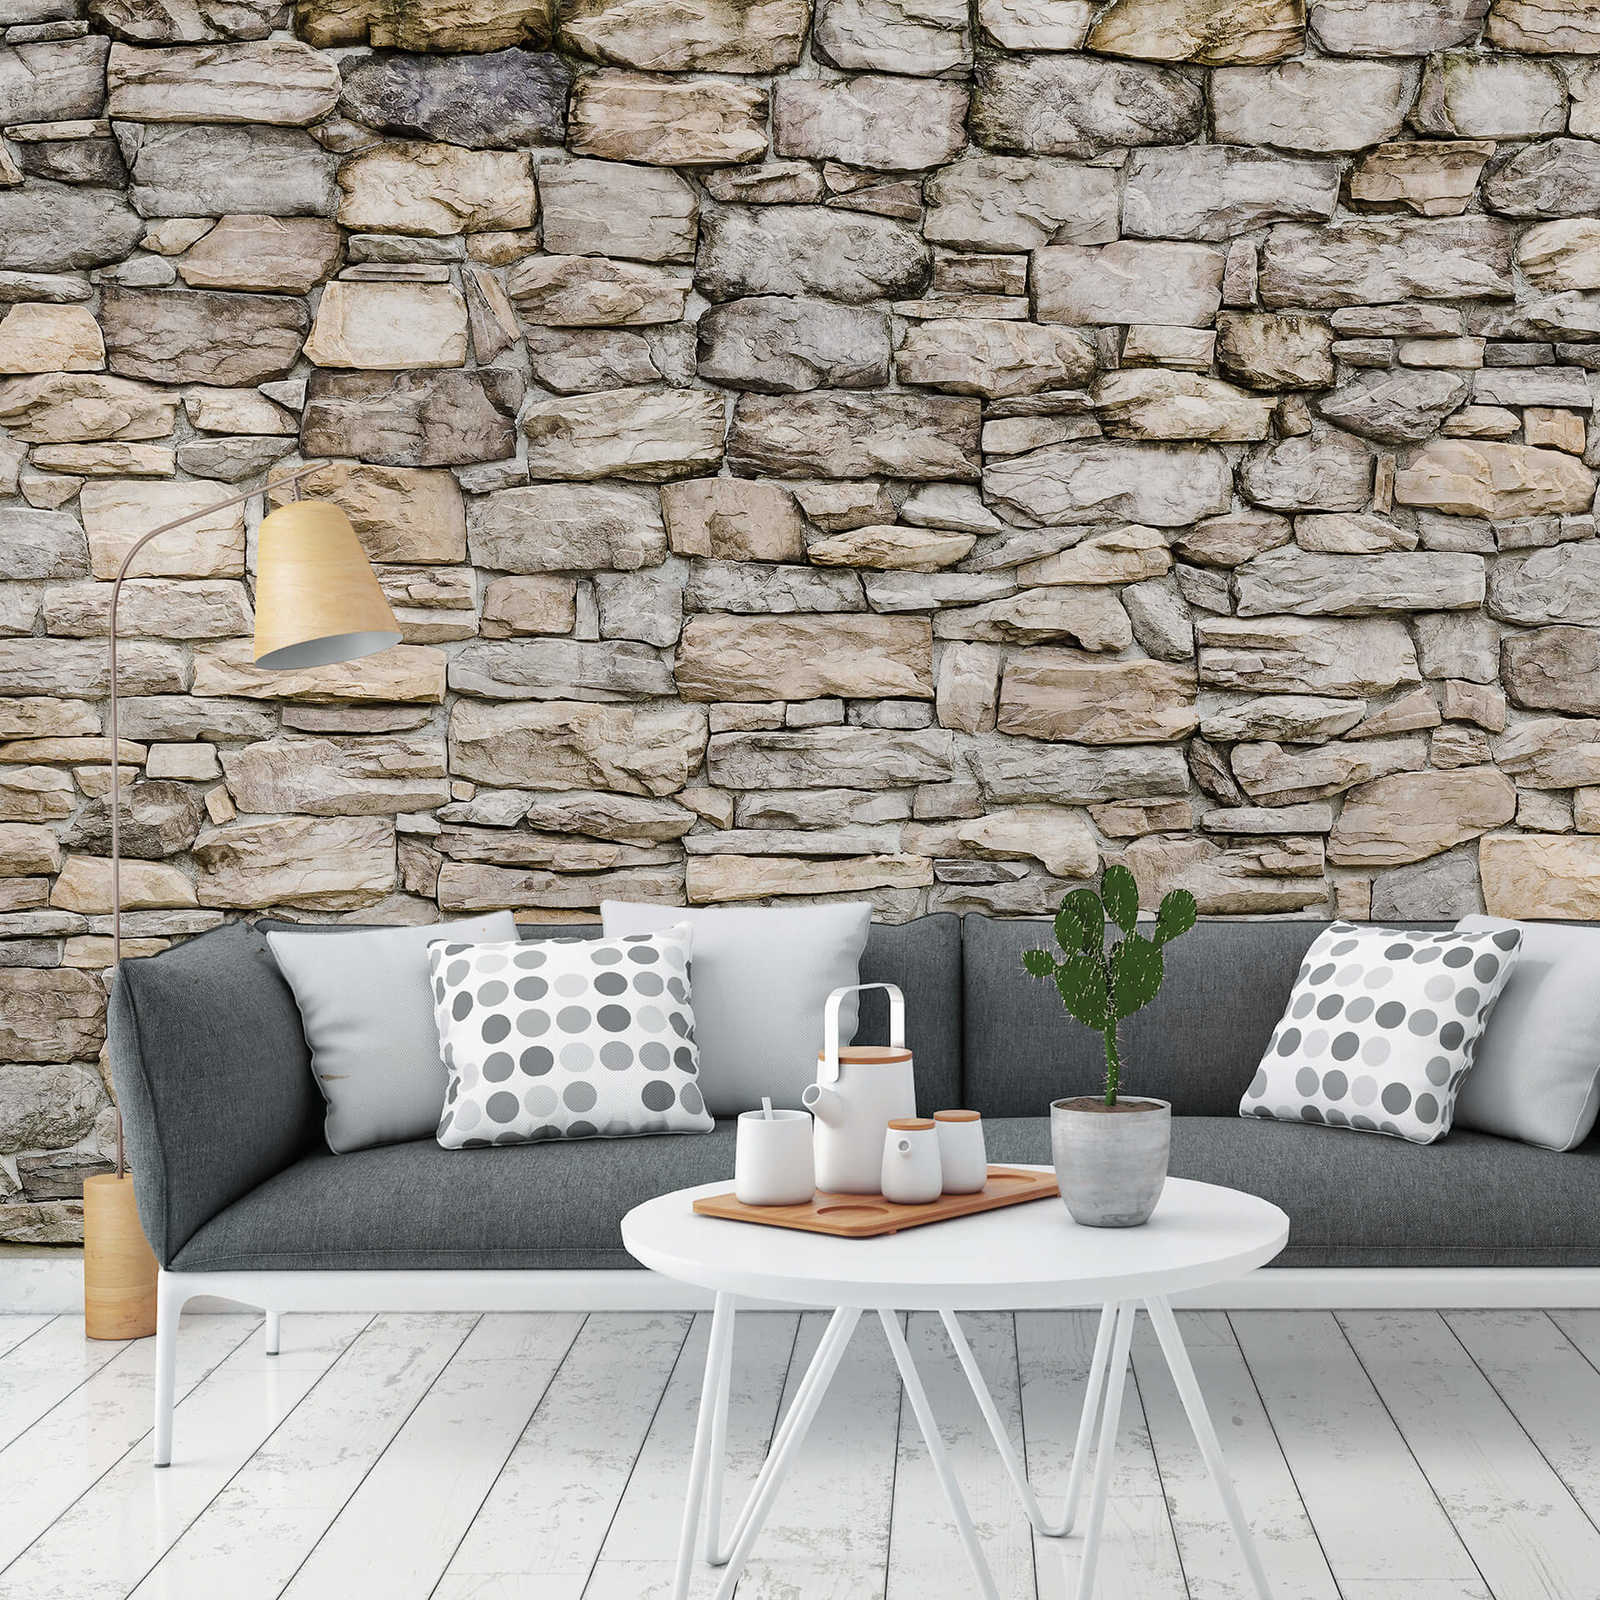             Mural de pared de piedra natural ligera - gris
        